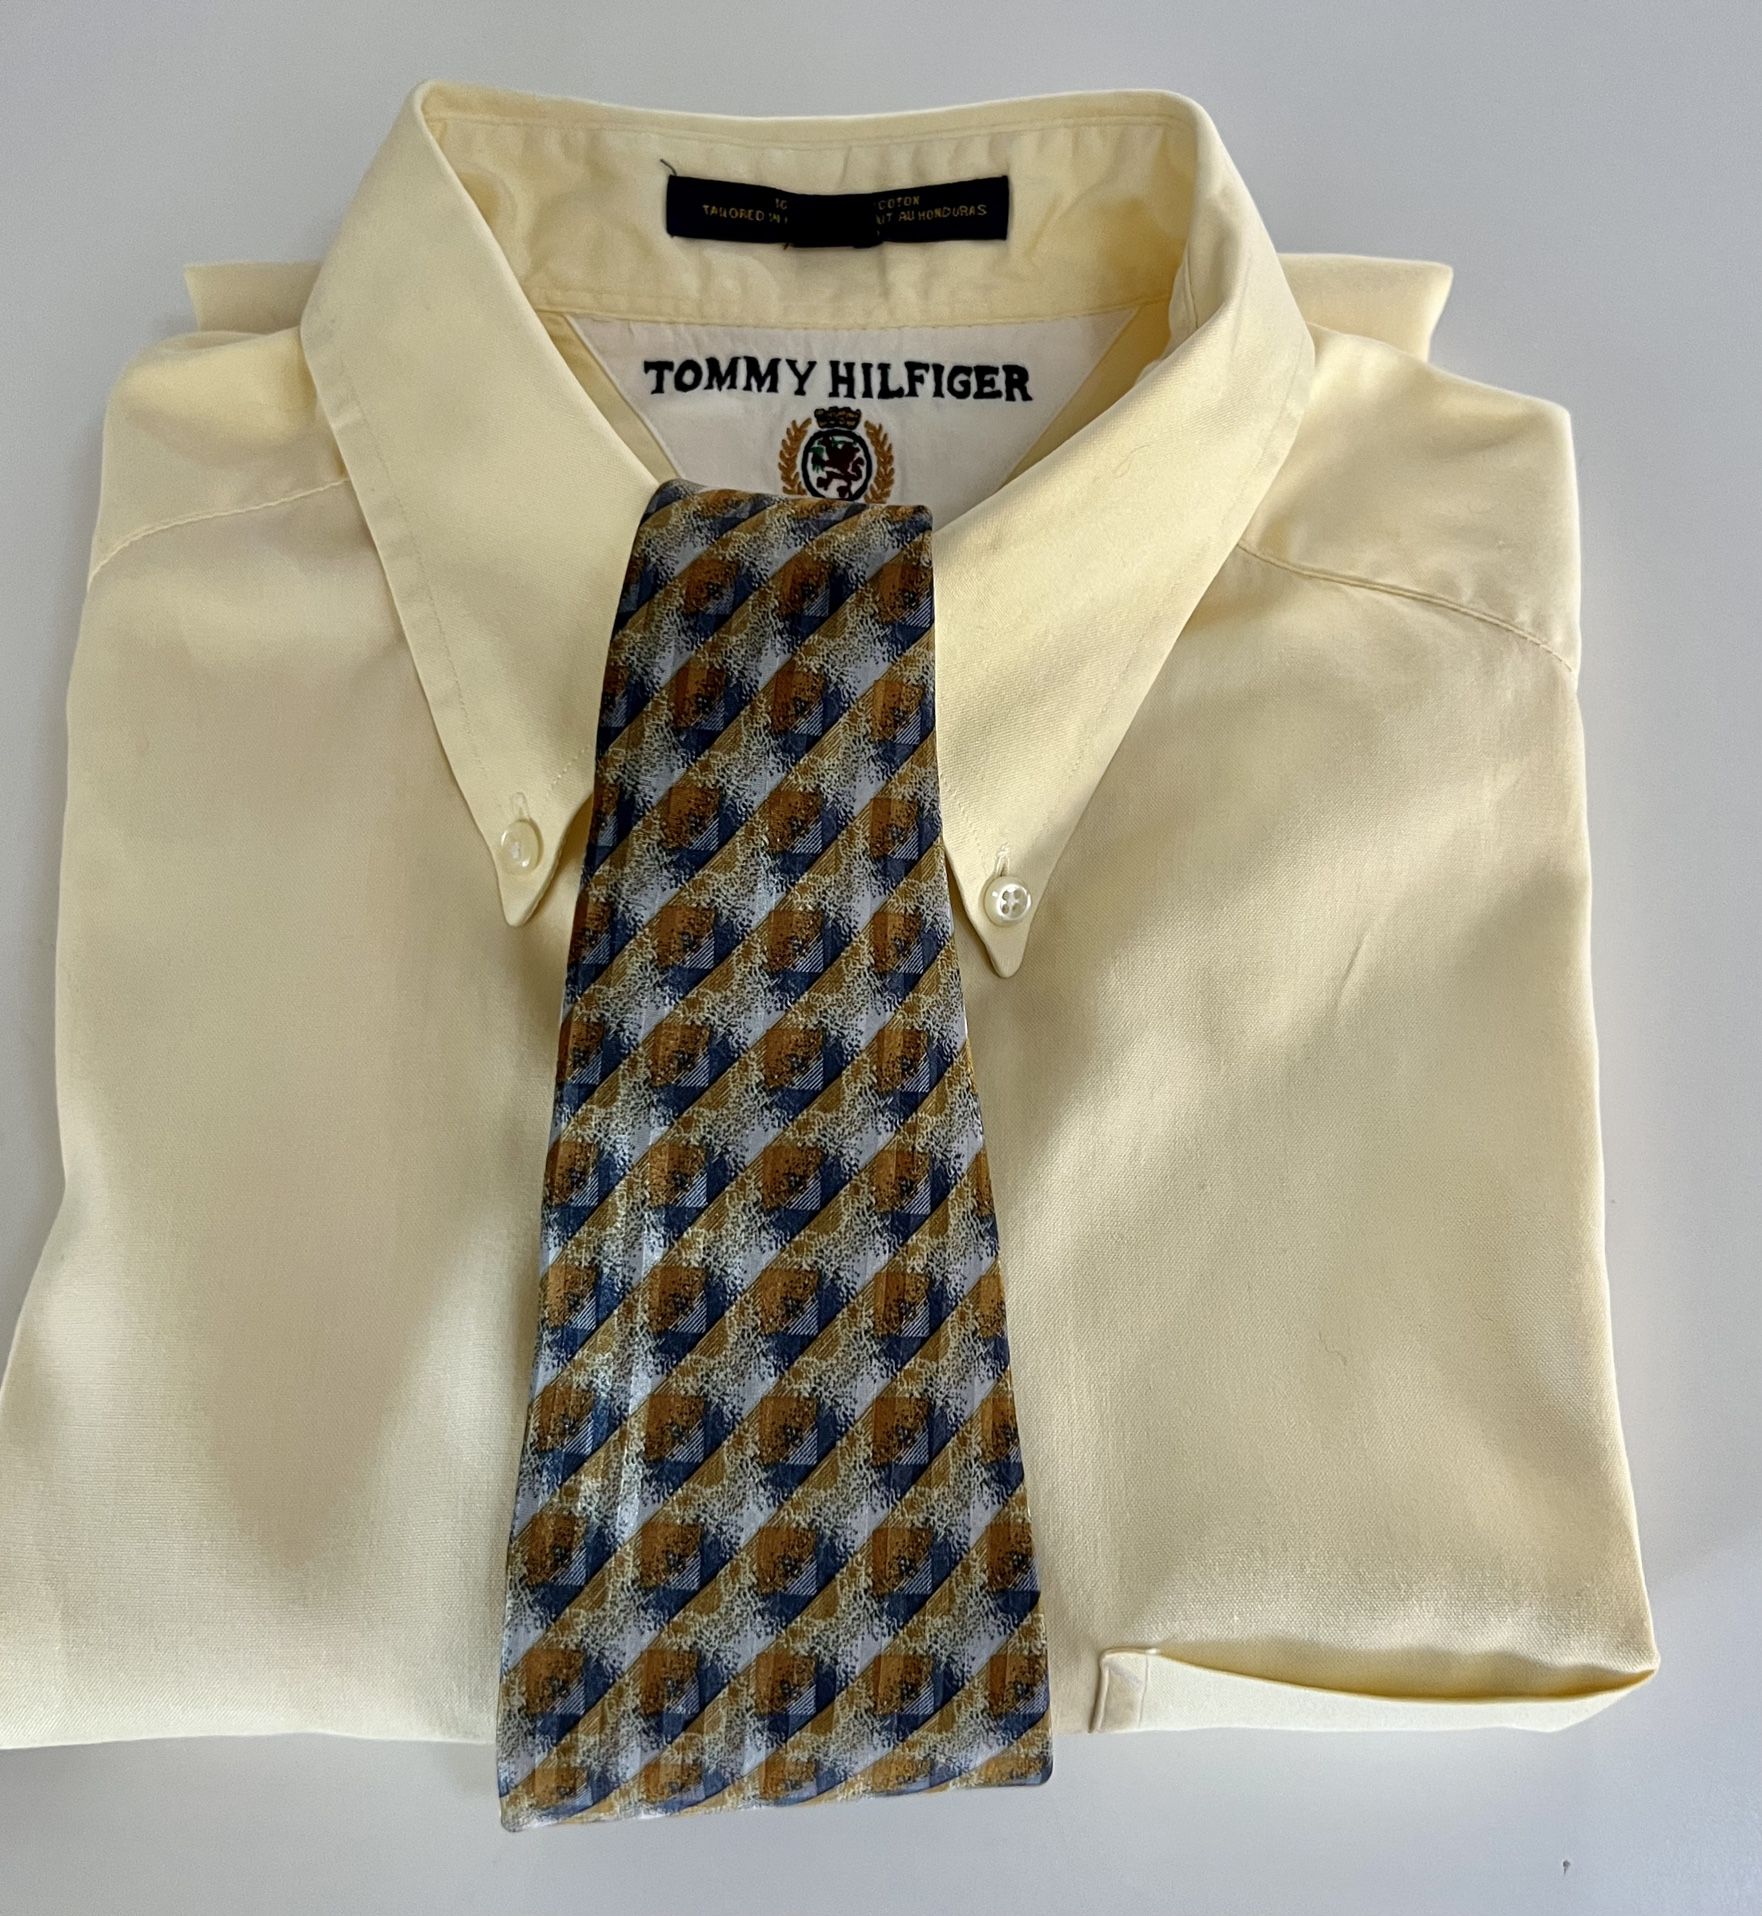 Men's Tommy Hilfiger long sleeve yellow dress shirt size 17.5 sleeve 32/33 w/tie